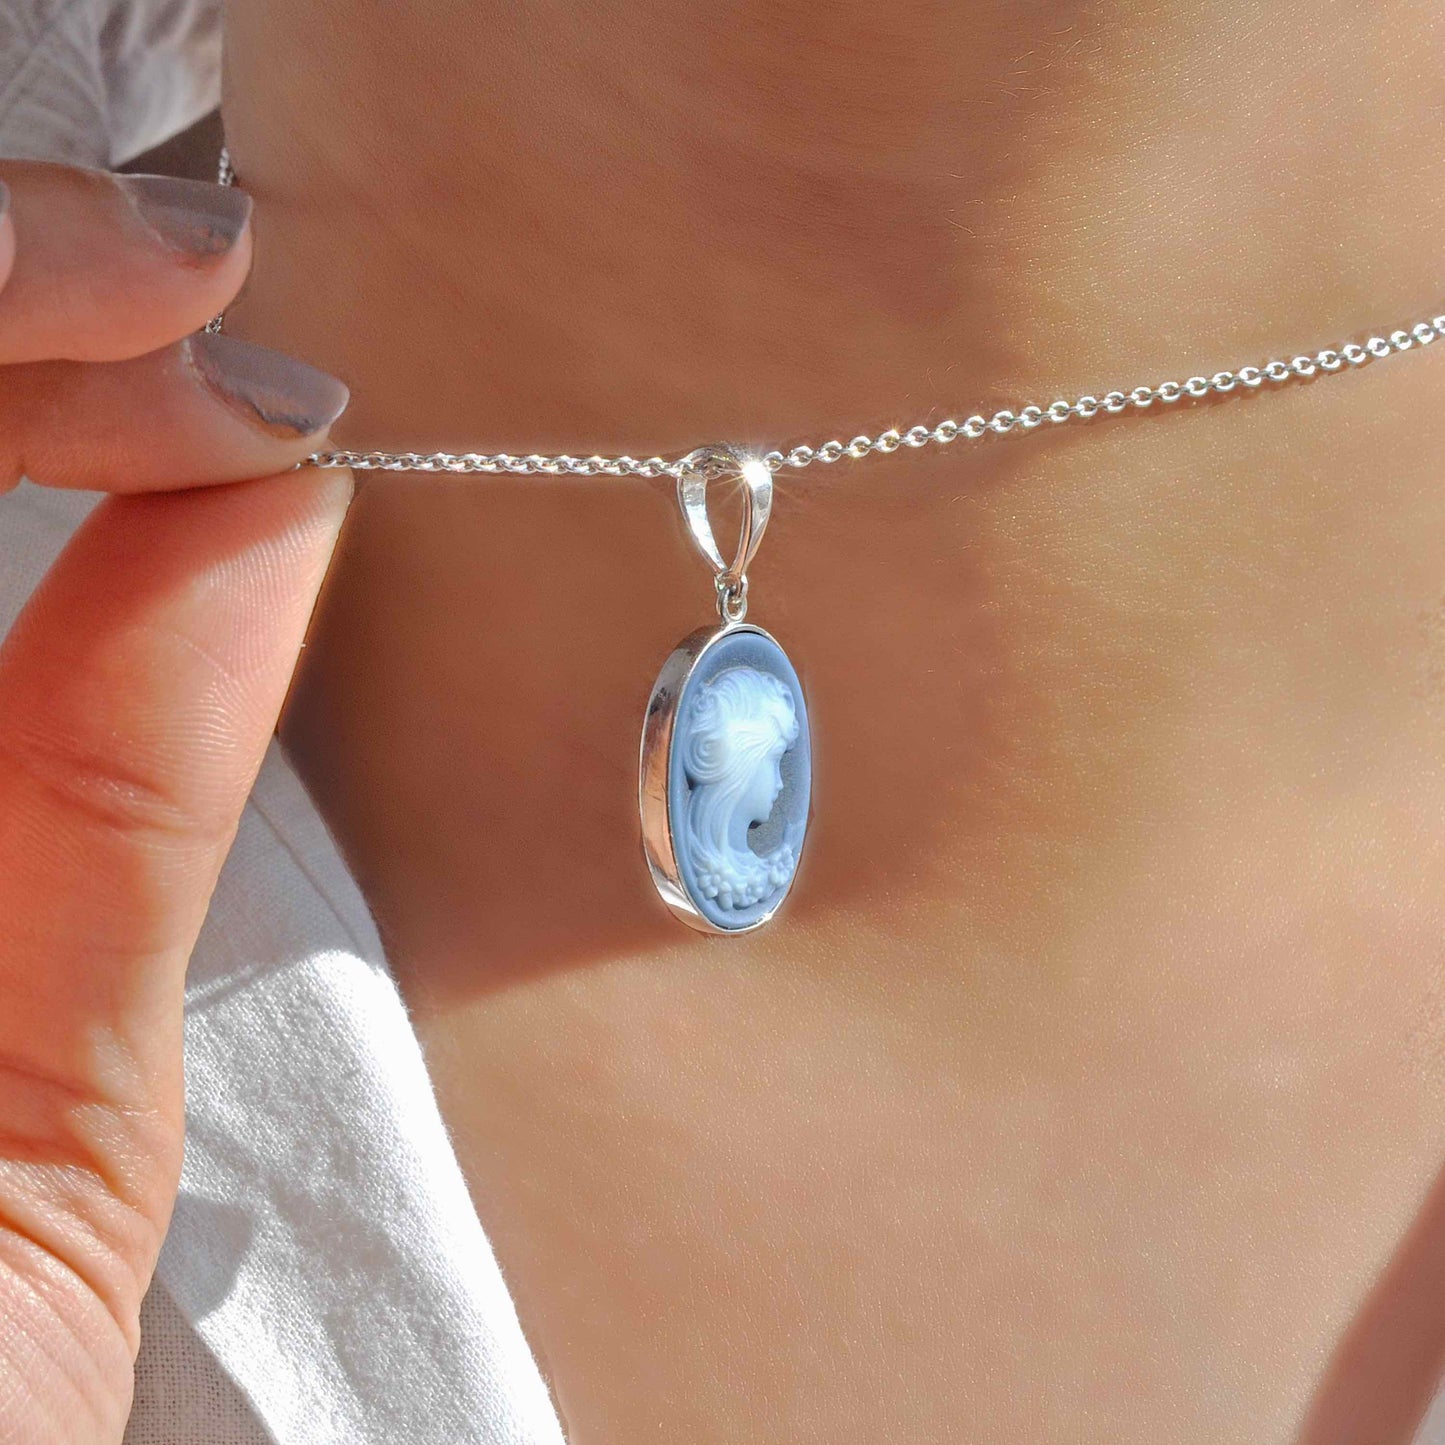 Blue agate pendant